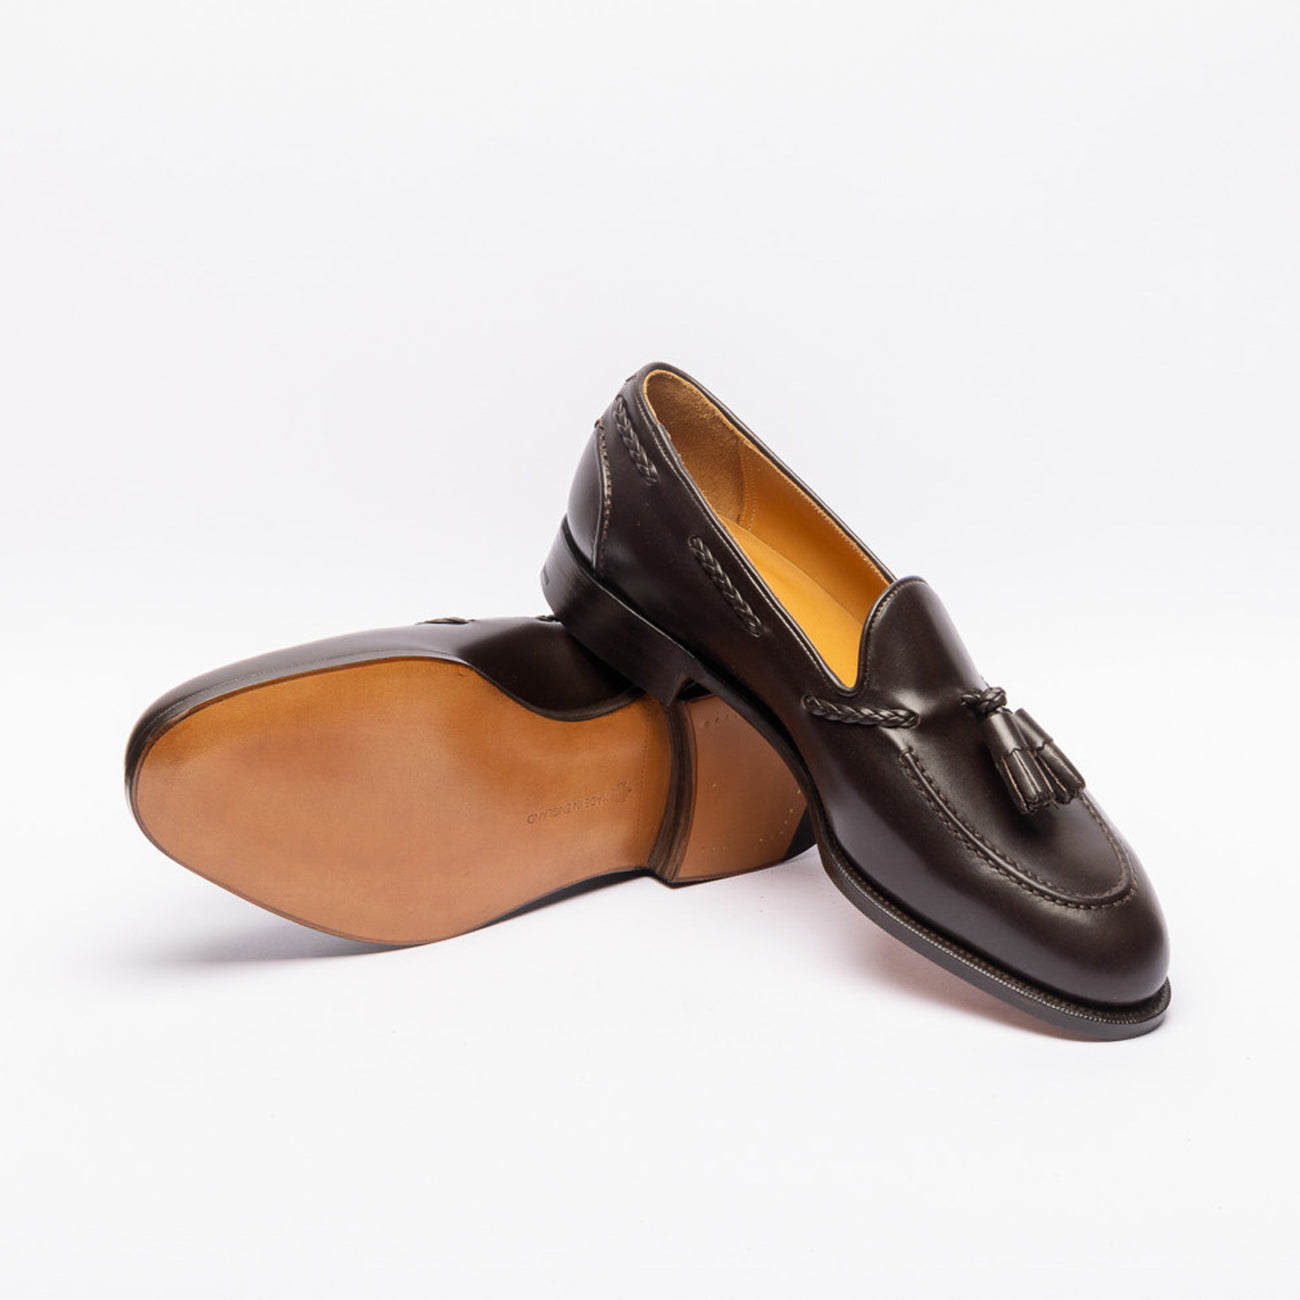 Edward Green Belgravia tassel loafers in brown leather (Espresso calf)